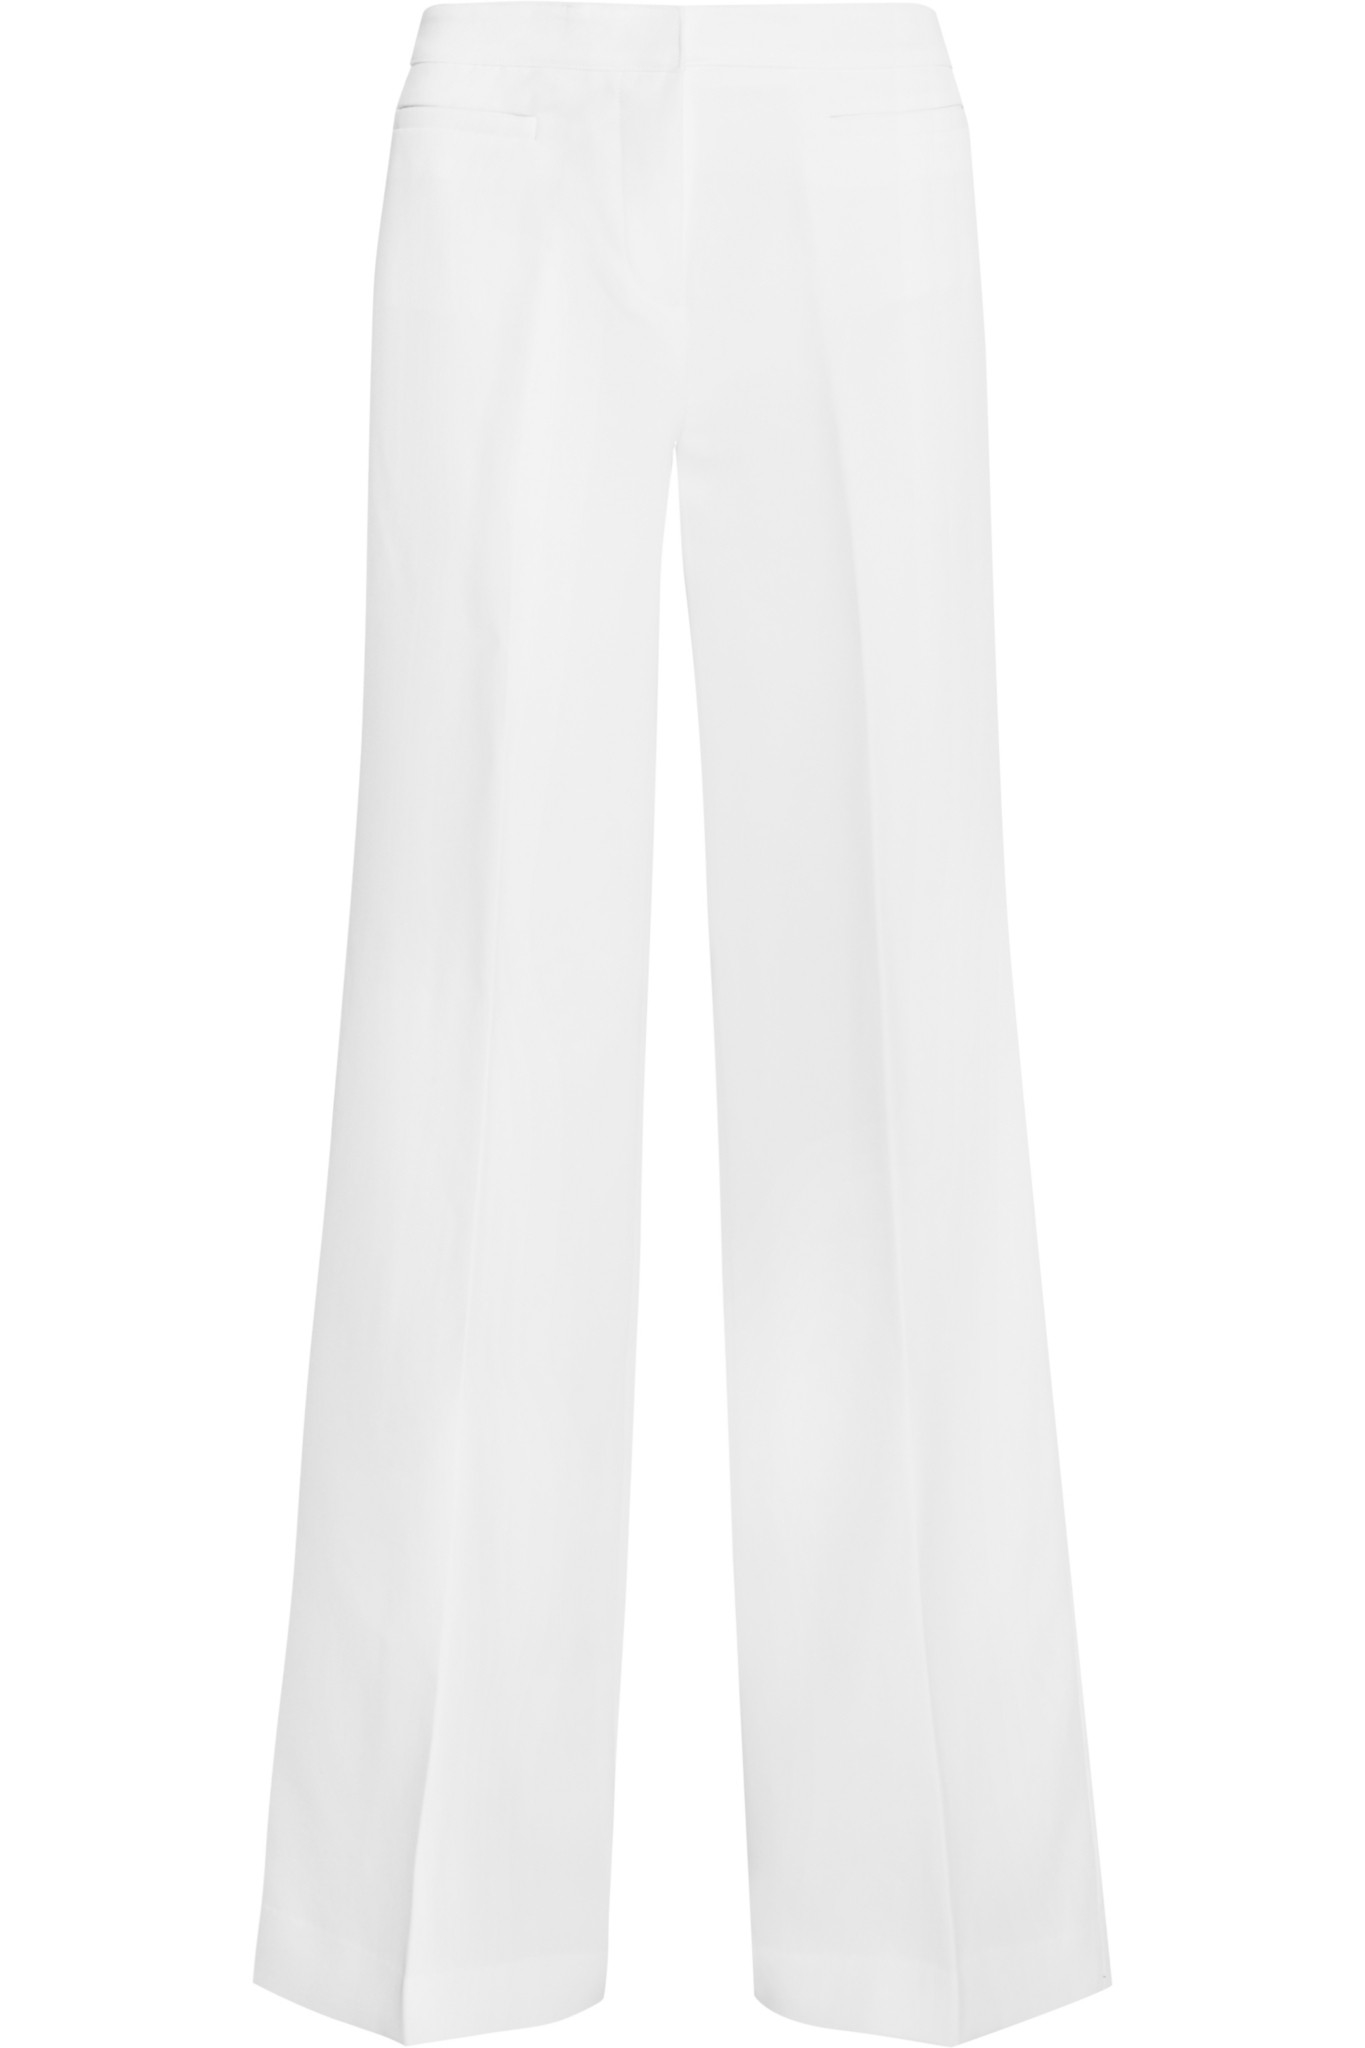 white michael kors pants